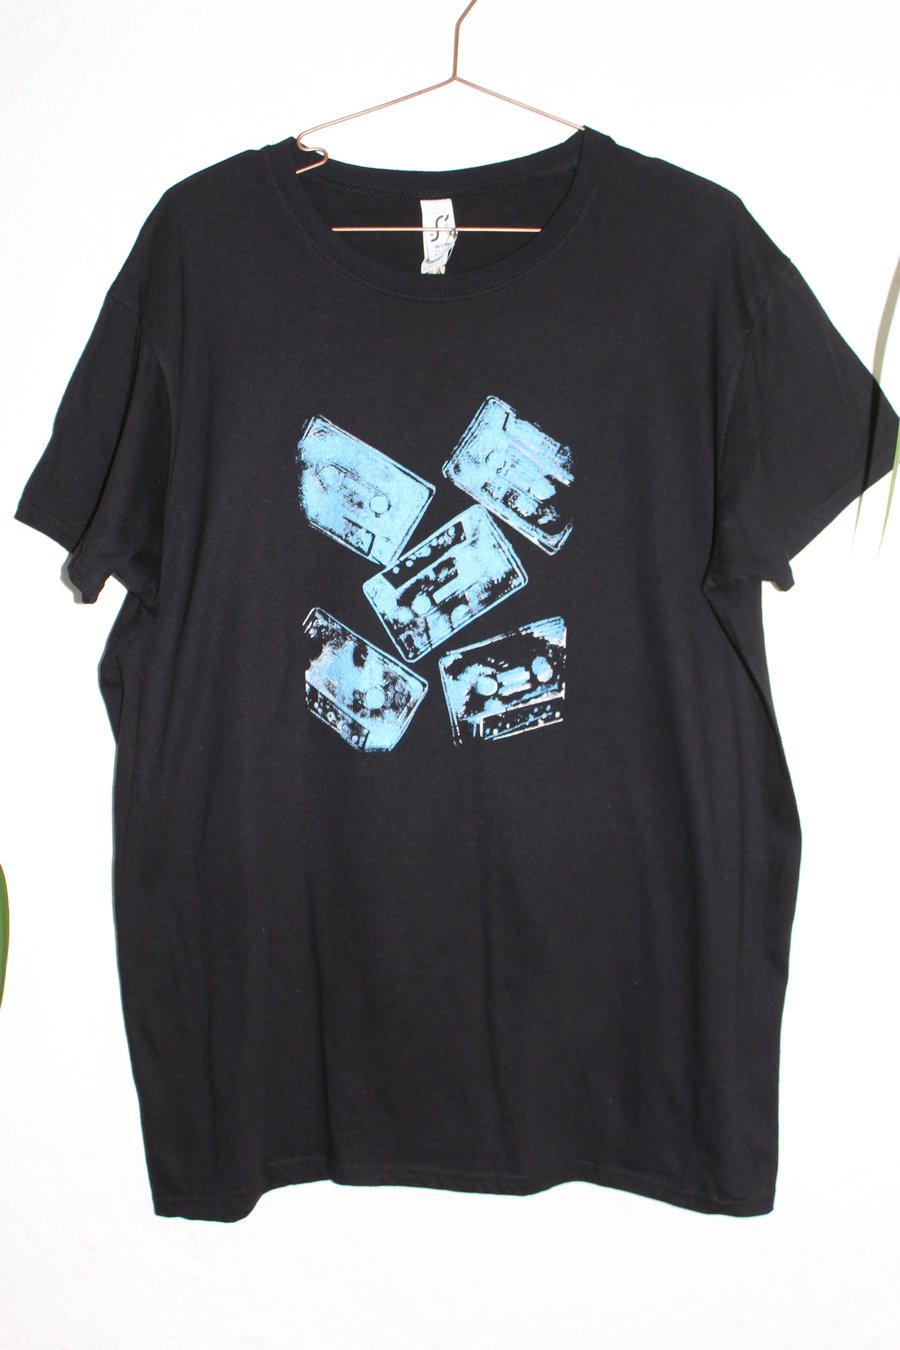 Unisex size M Black organic cotton T shirt,blue retro tape cassette screen print